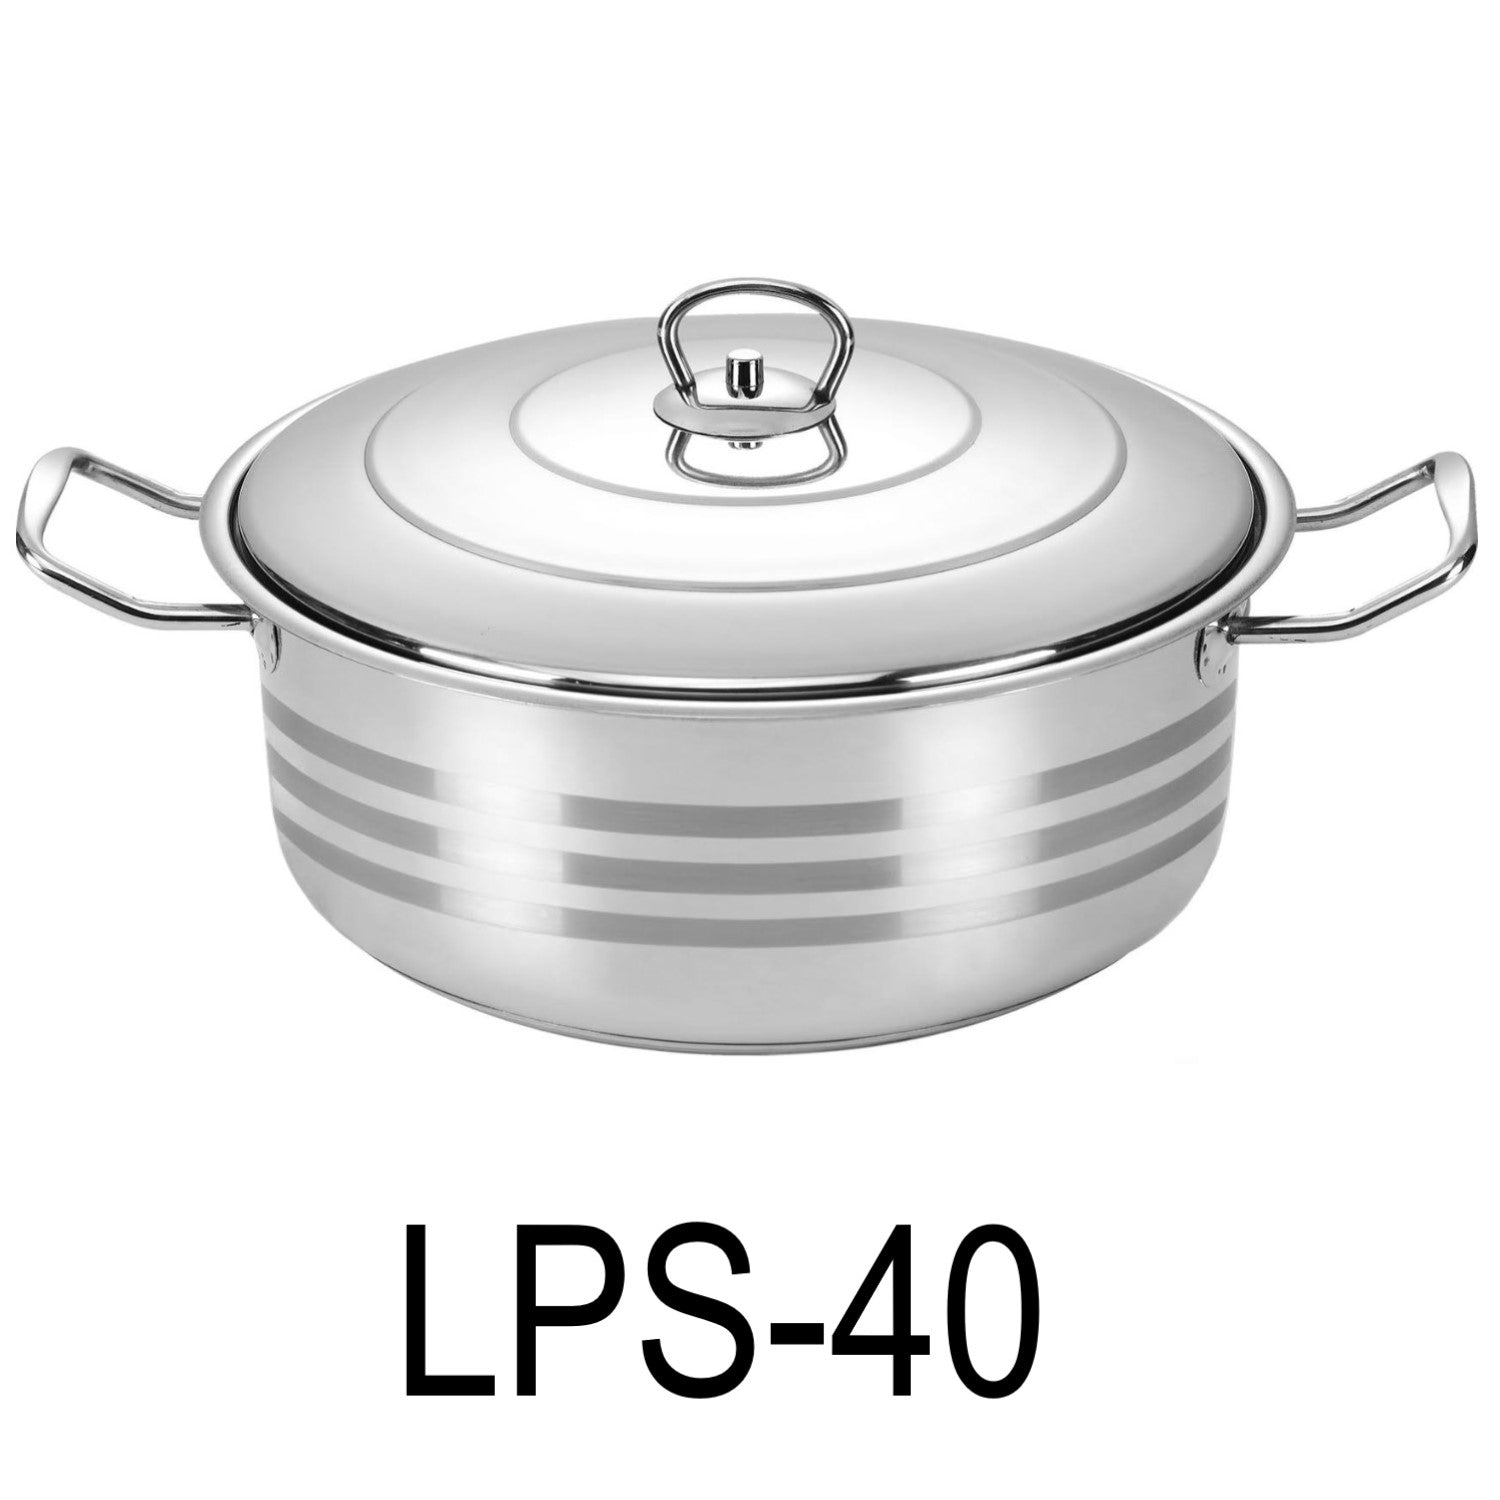 10 Quart Polished Aluminum Stock Pot with Lid 10 quart